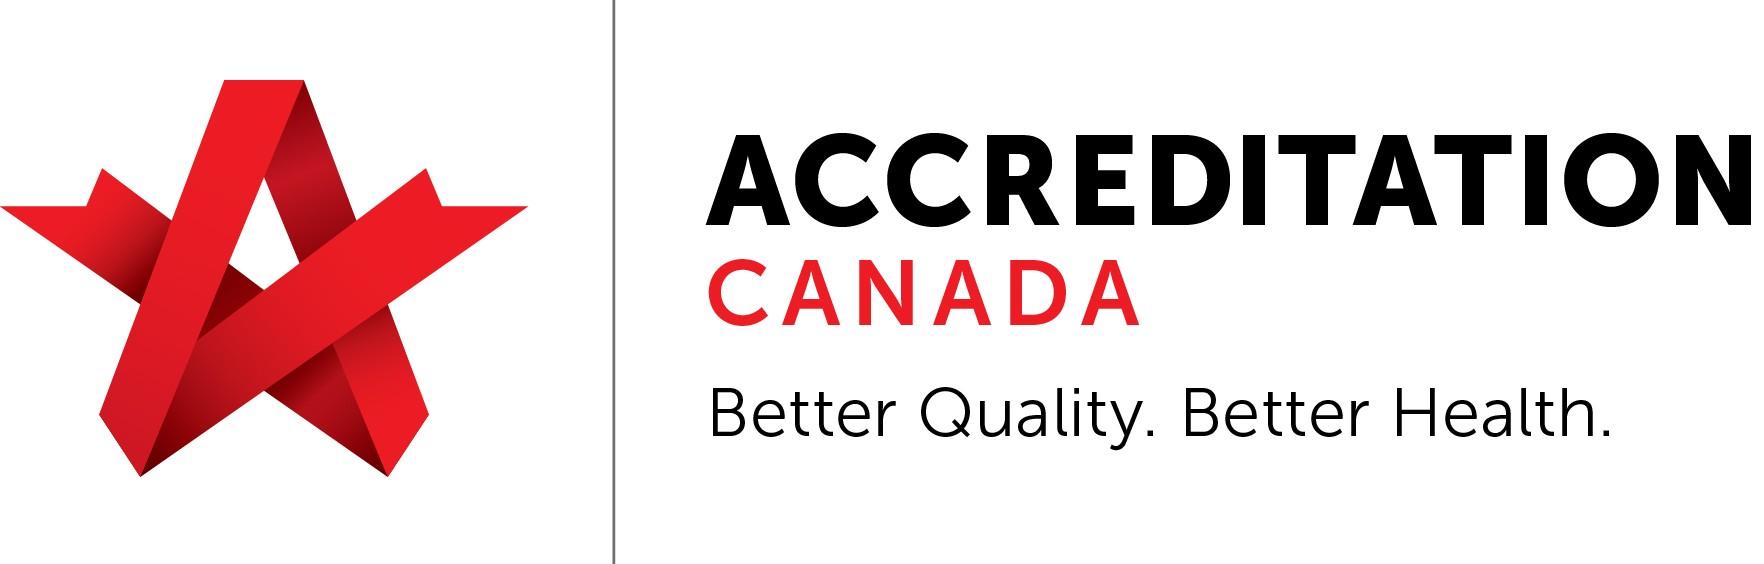 Accreditation Logo - Accreditation Logo - Hospital News